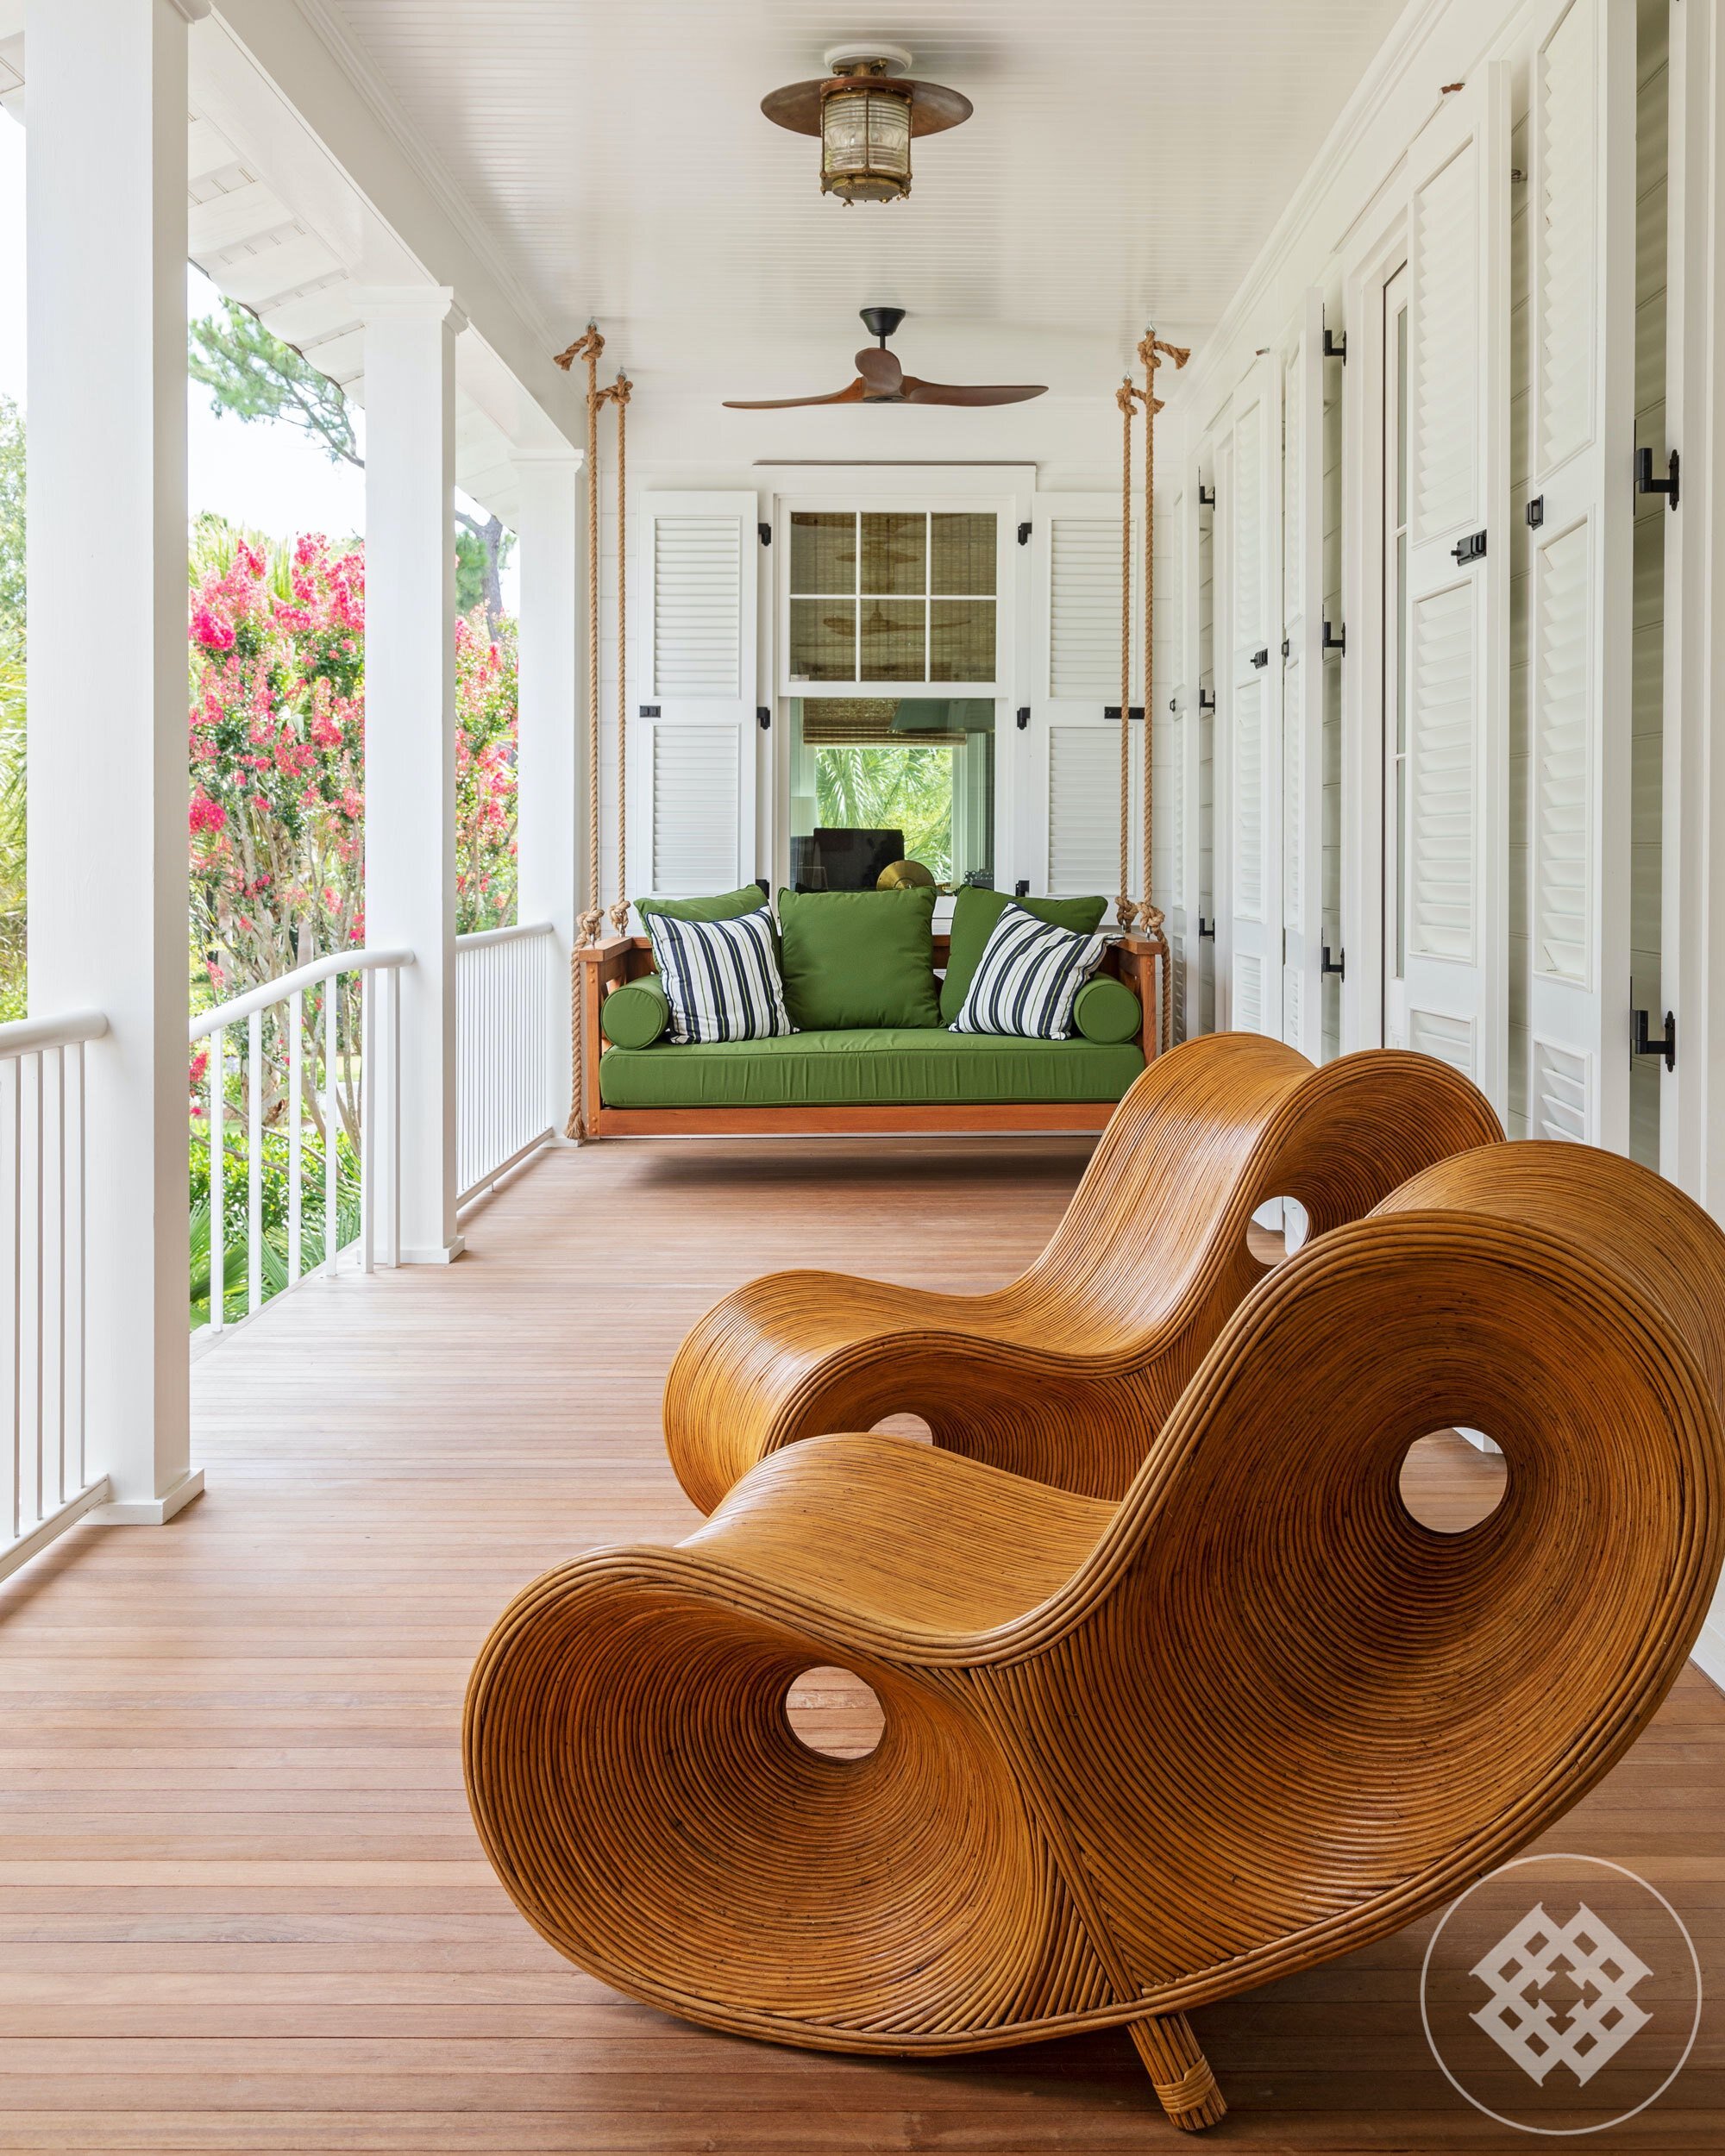 bcb-front-porch-modern-rattan-chaise-lounge-chairs.jpg